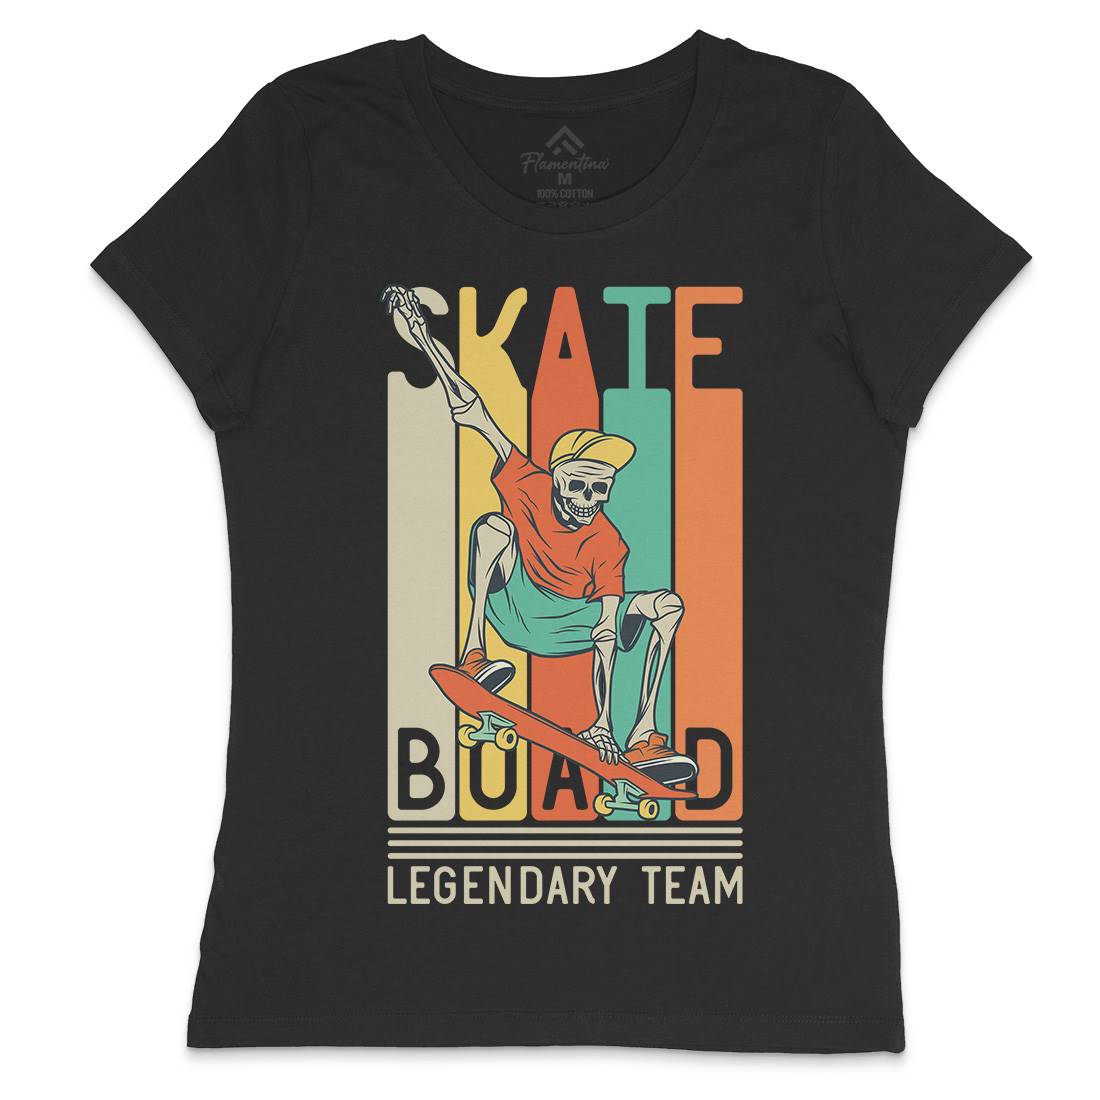 Legendary Team Womens Crew Neck T-Shirt Skate D952